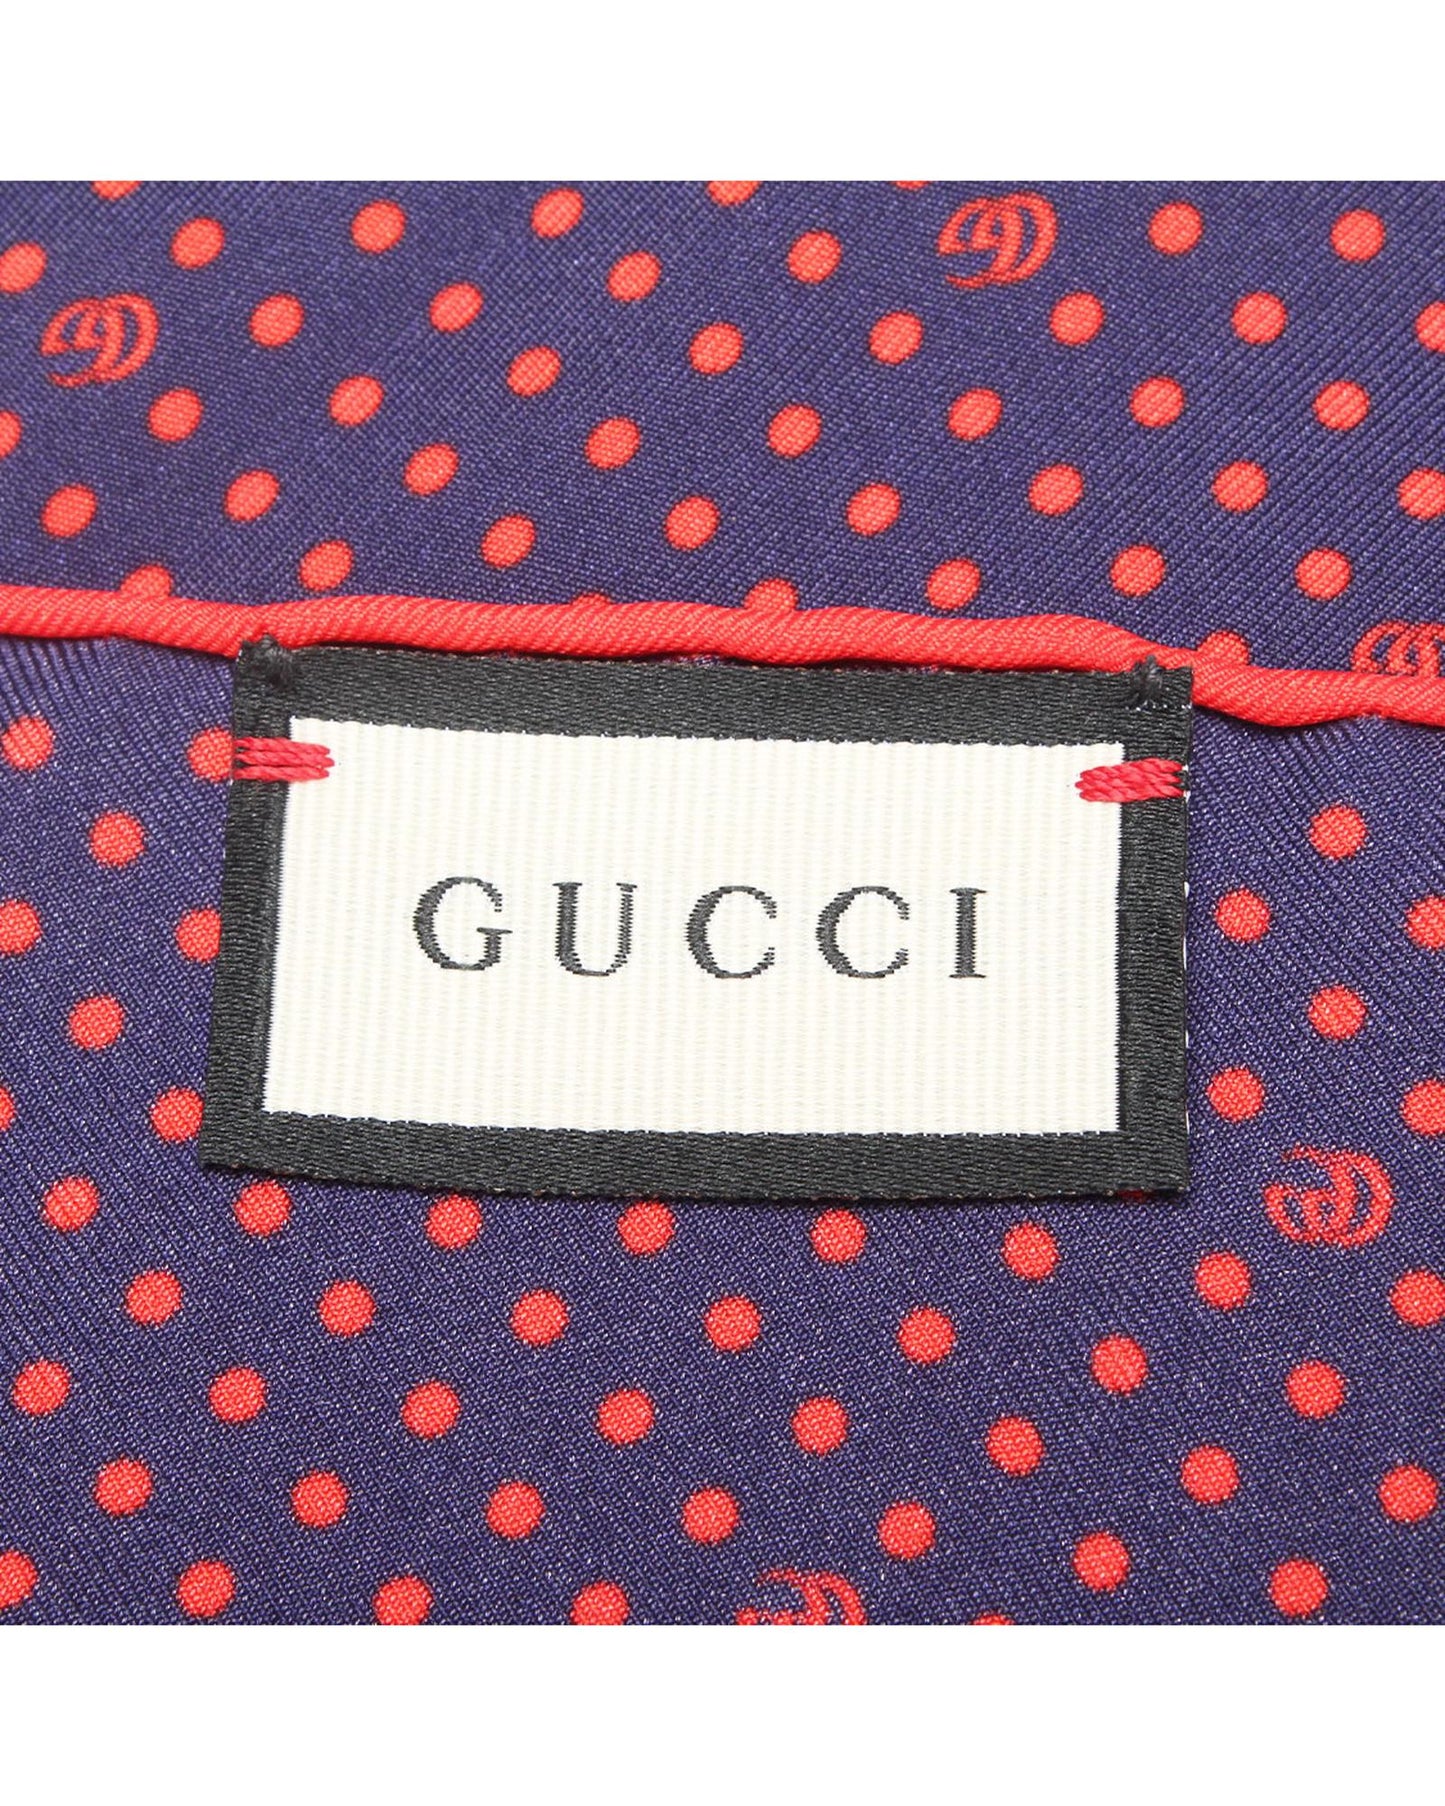 Gucci Women's Polka Dot Pocket Square Scarf in Purple